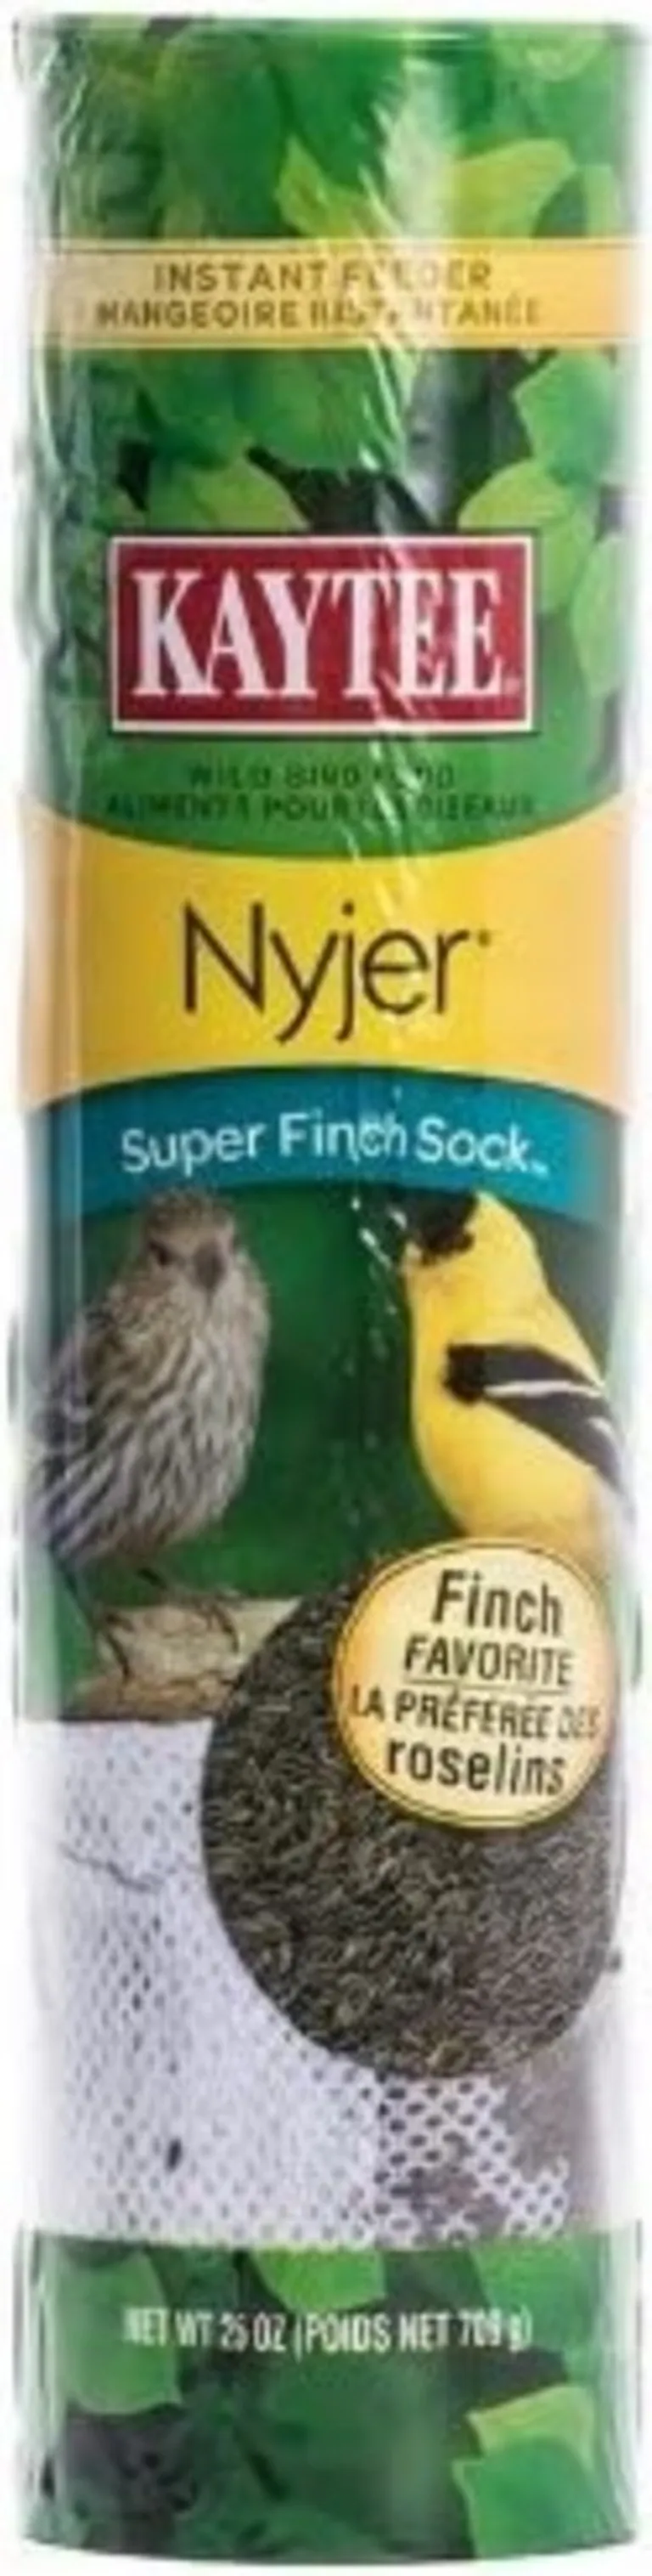 Kaytee Nyjer Super Finch Sock Instant Feeder with Wild Bird Food Photo 3